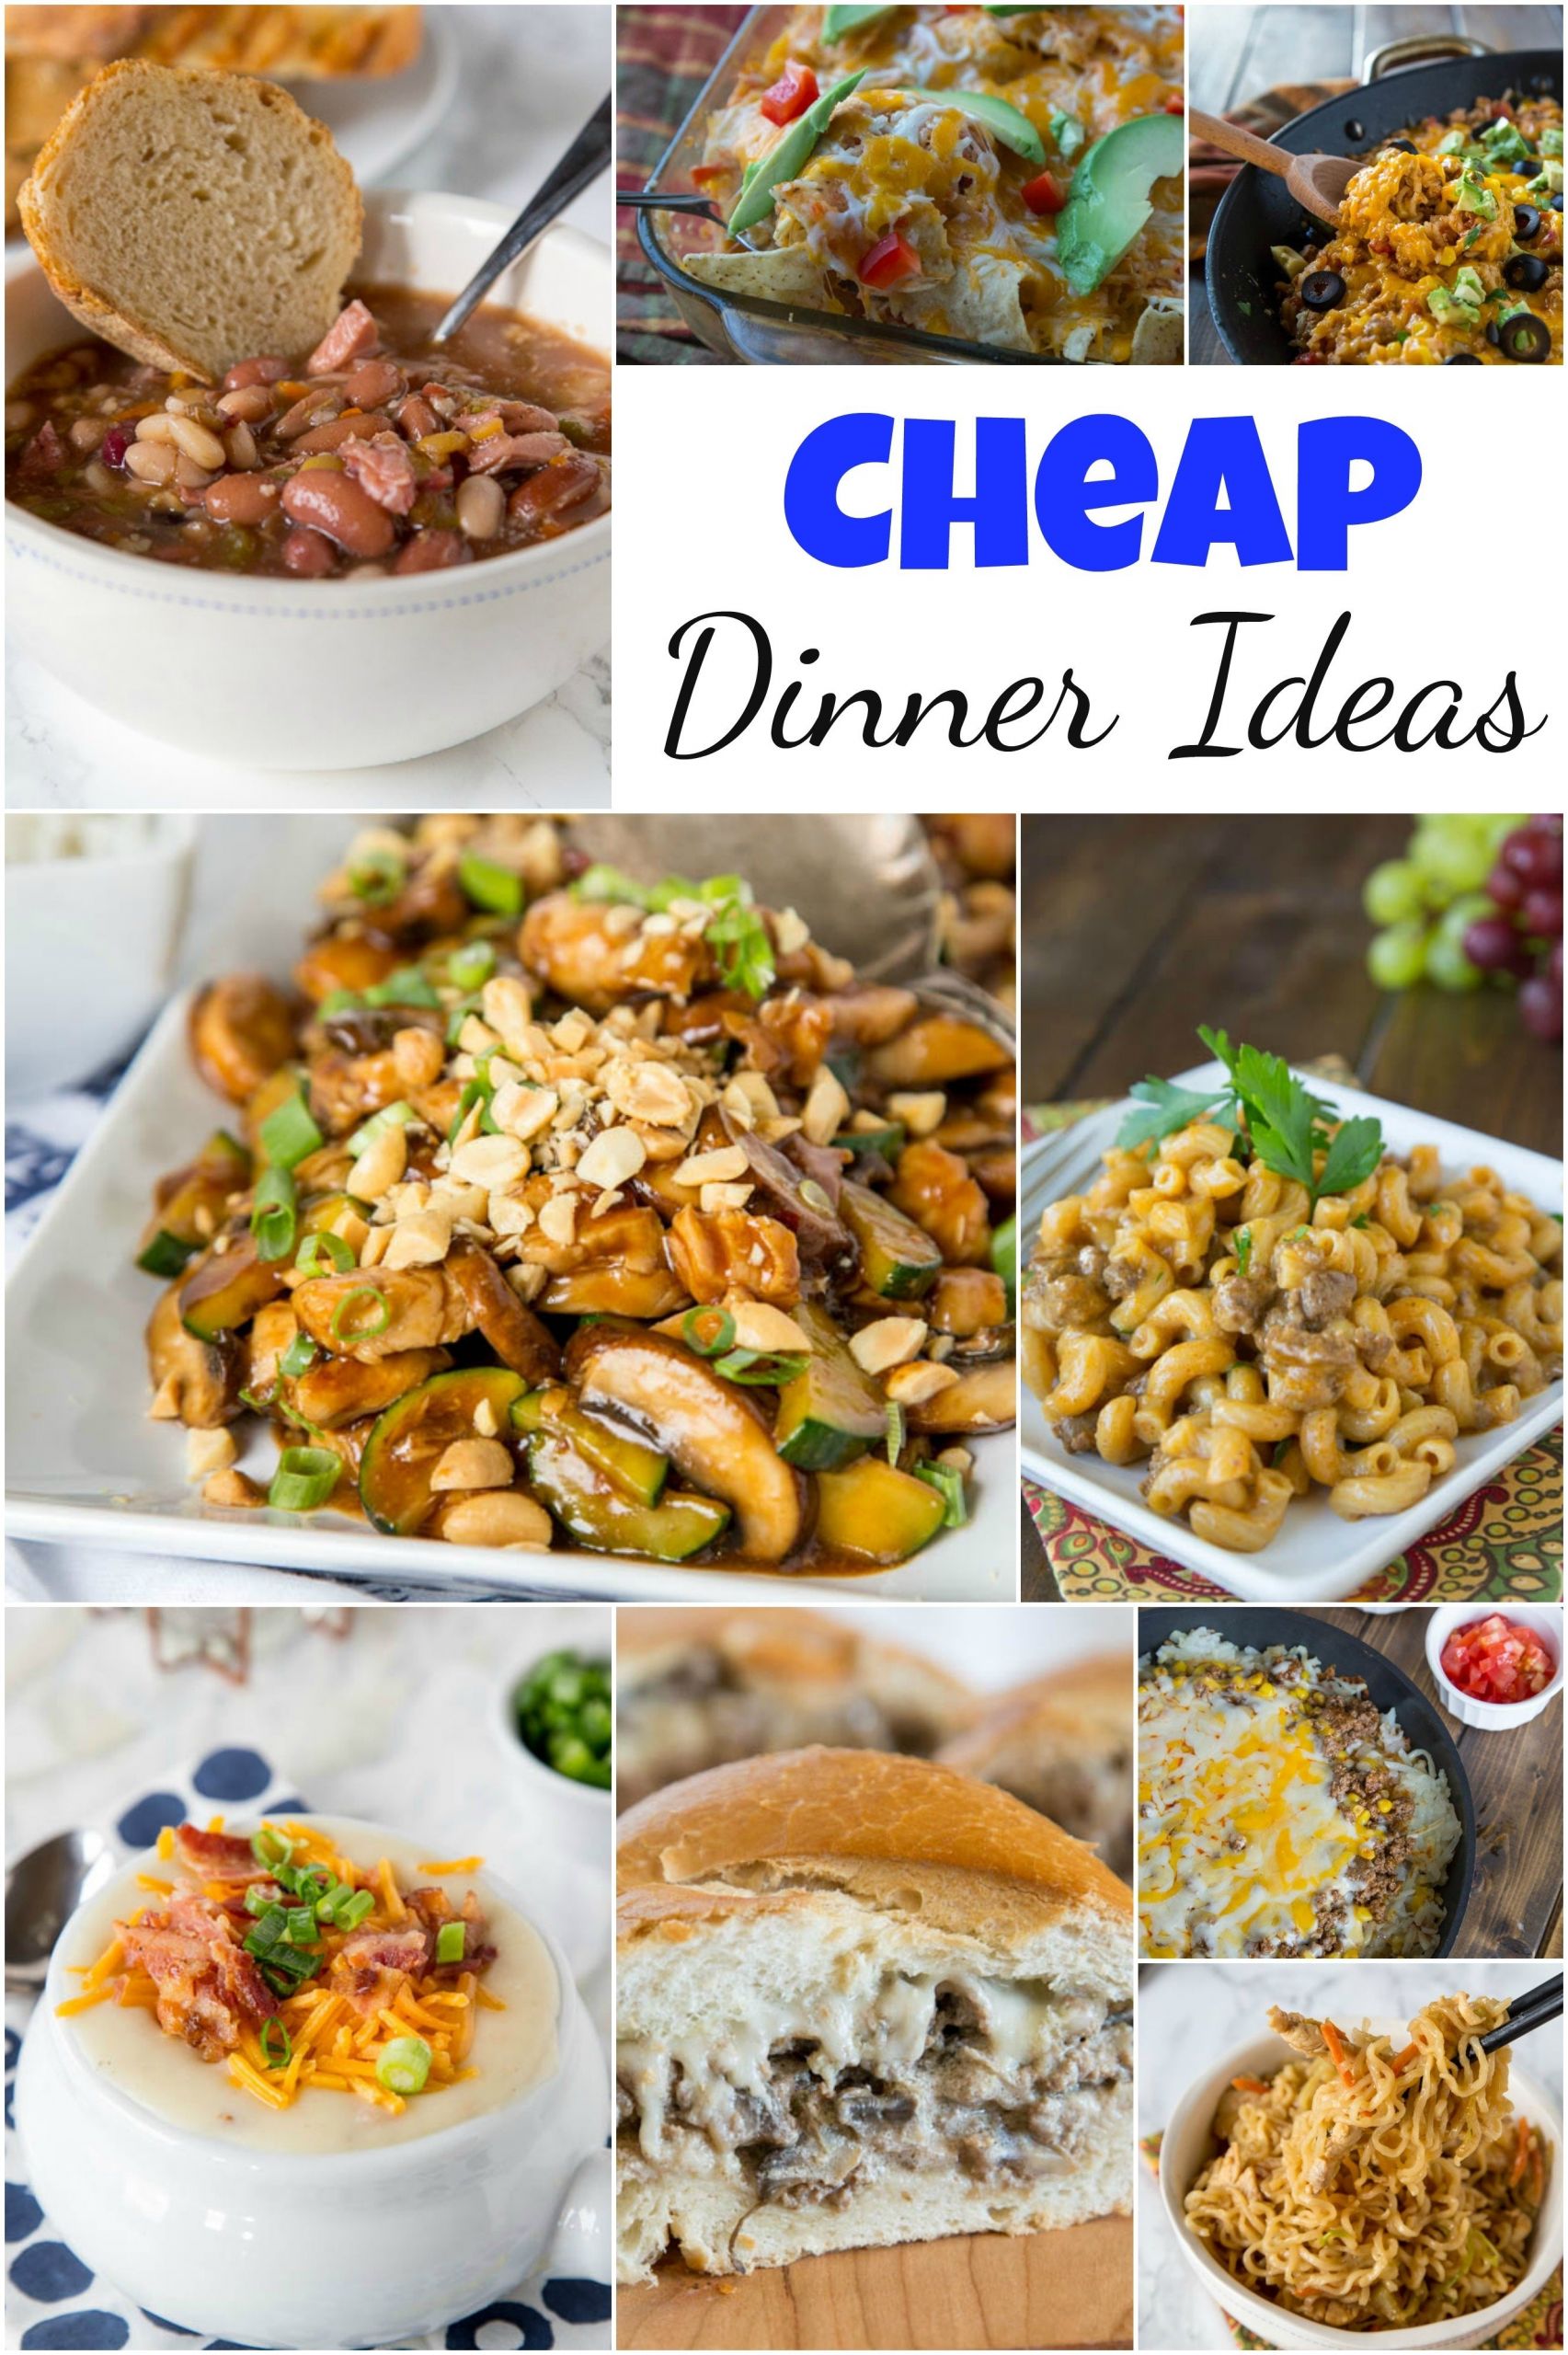 Easy Dinner Recipes For Two Cheap
 10 Lovely Inexpensive Dinner Ideas For Two 2020